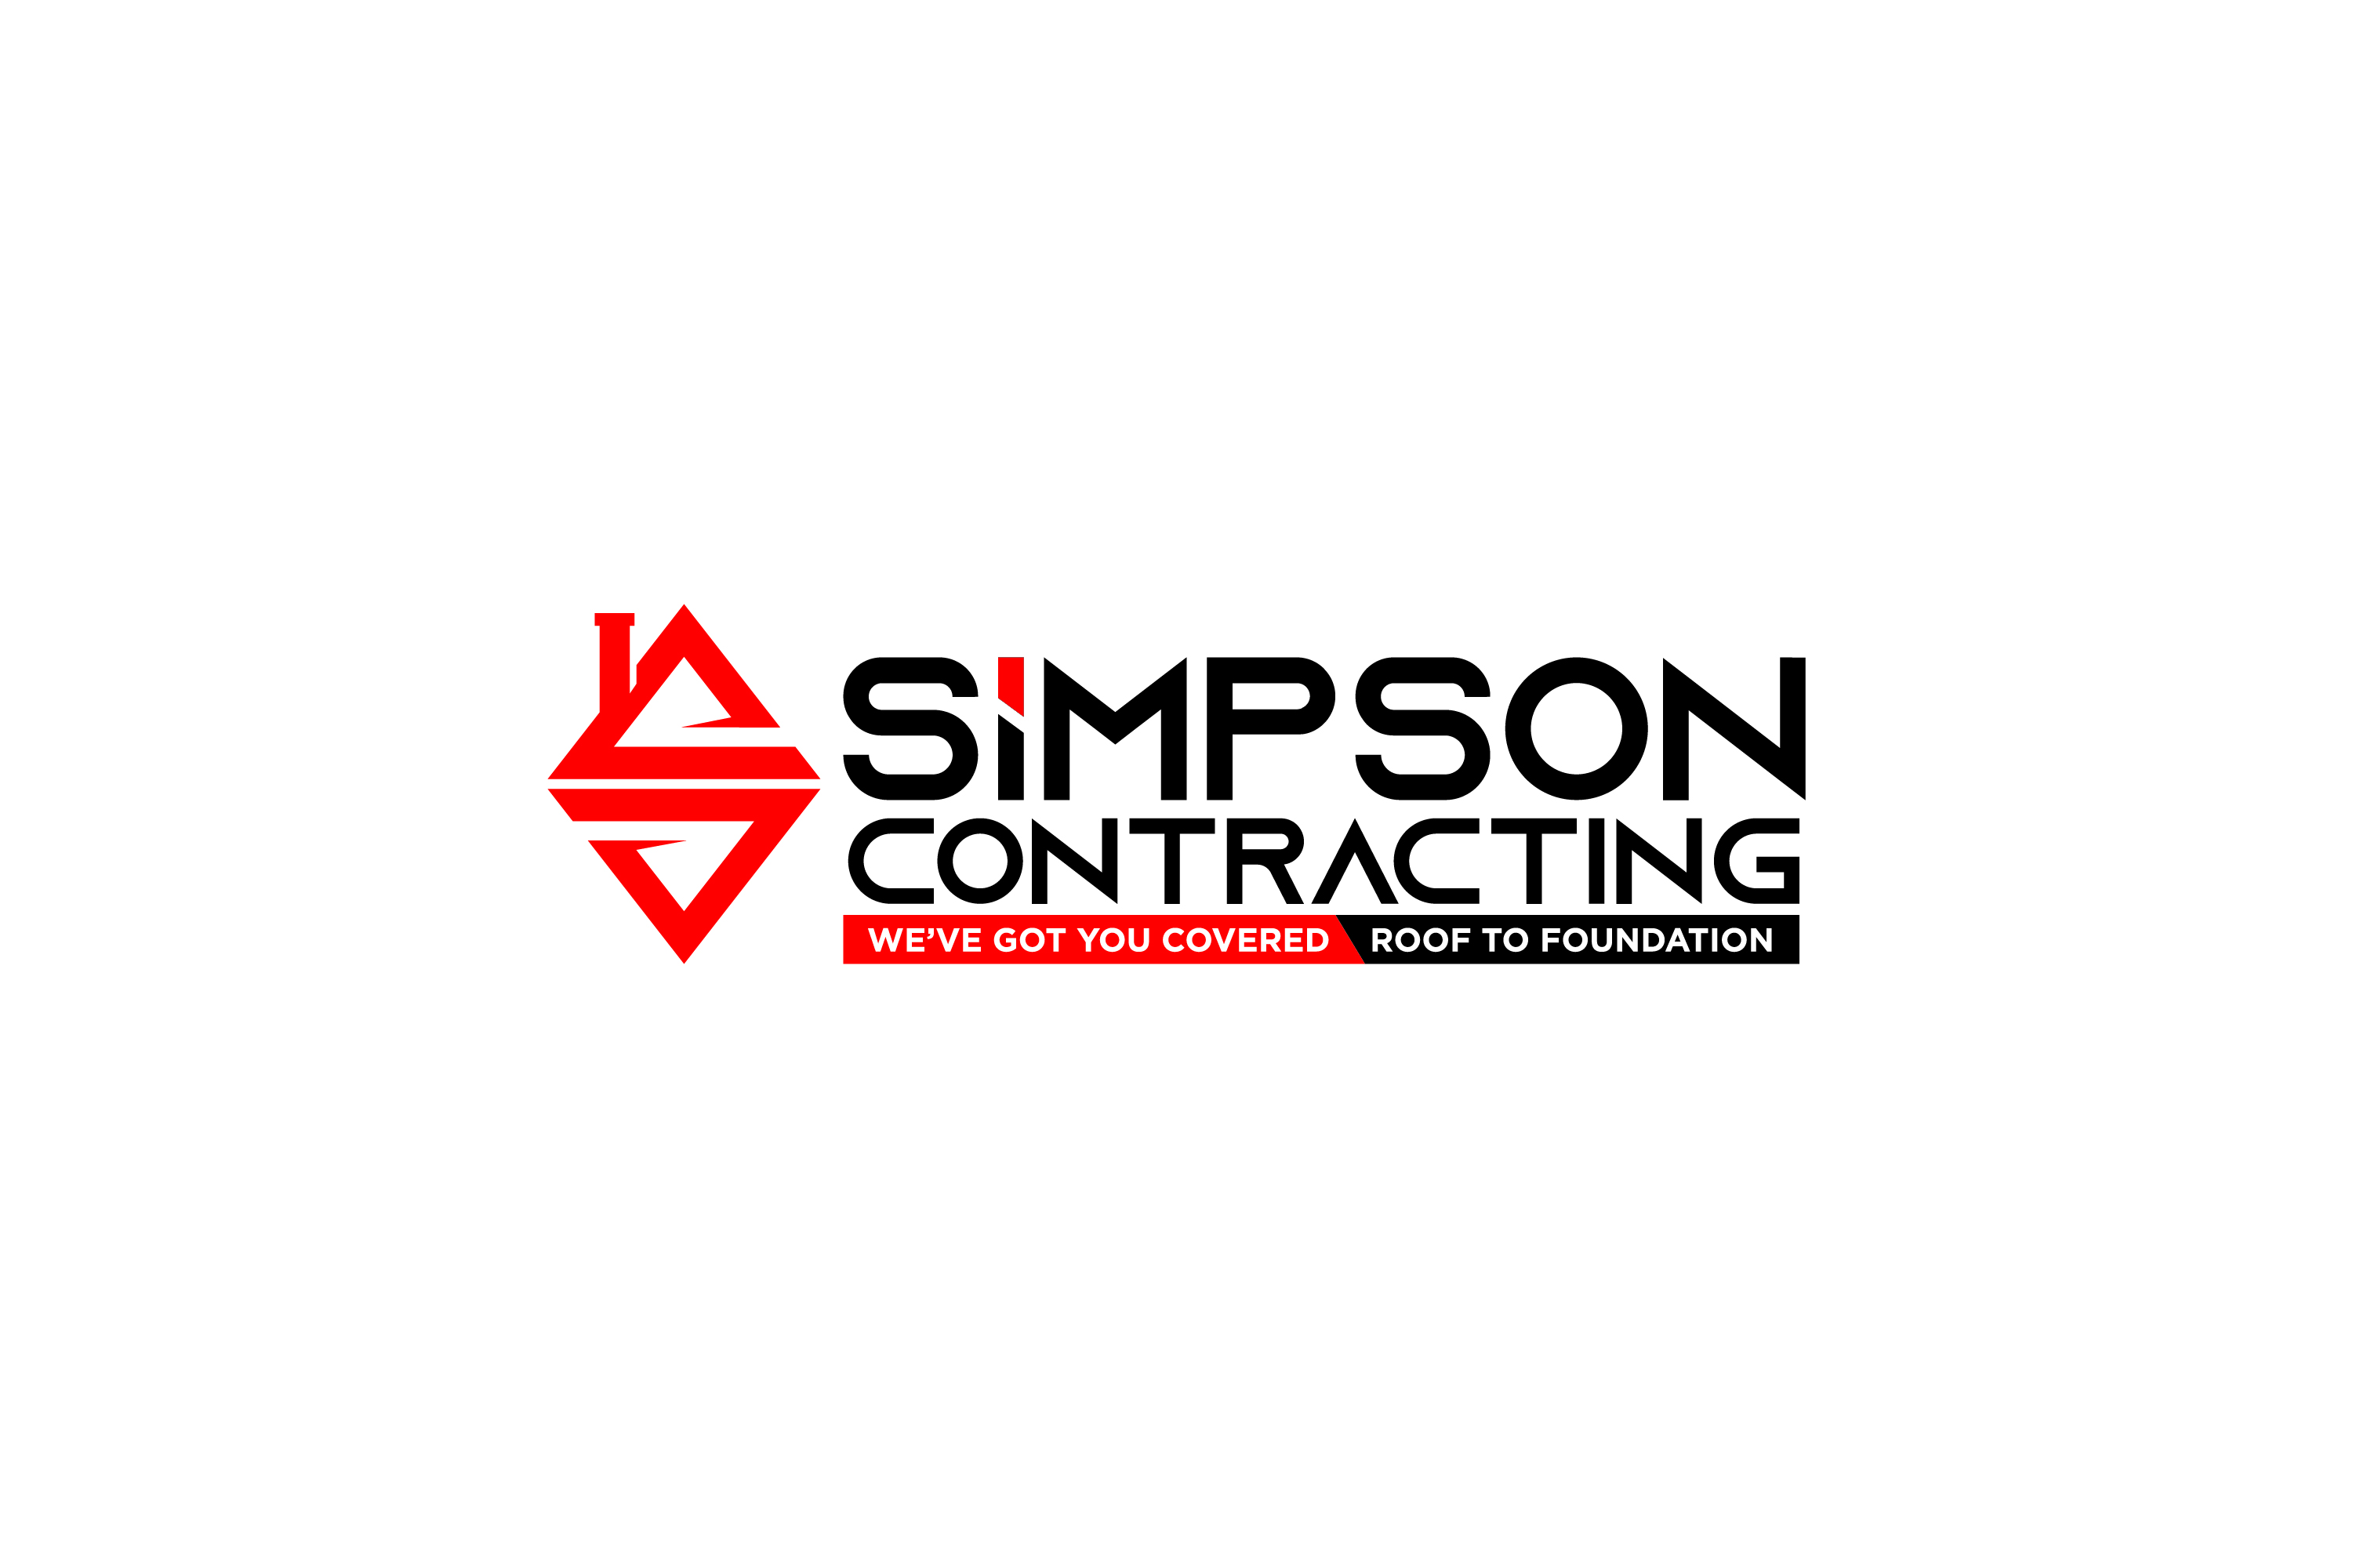 Simpson-Contracting-logo.jpg